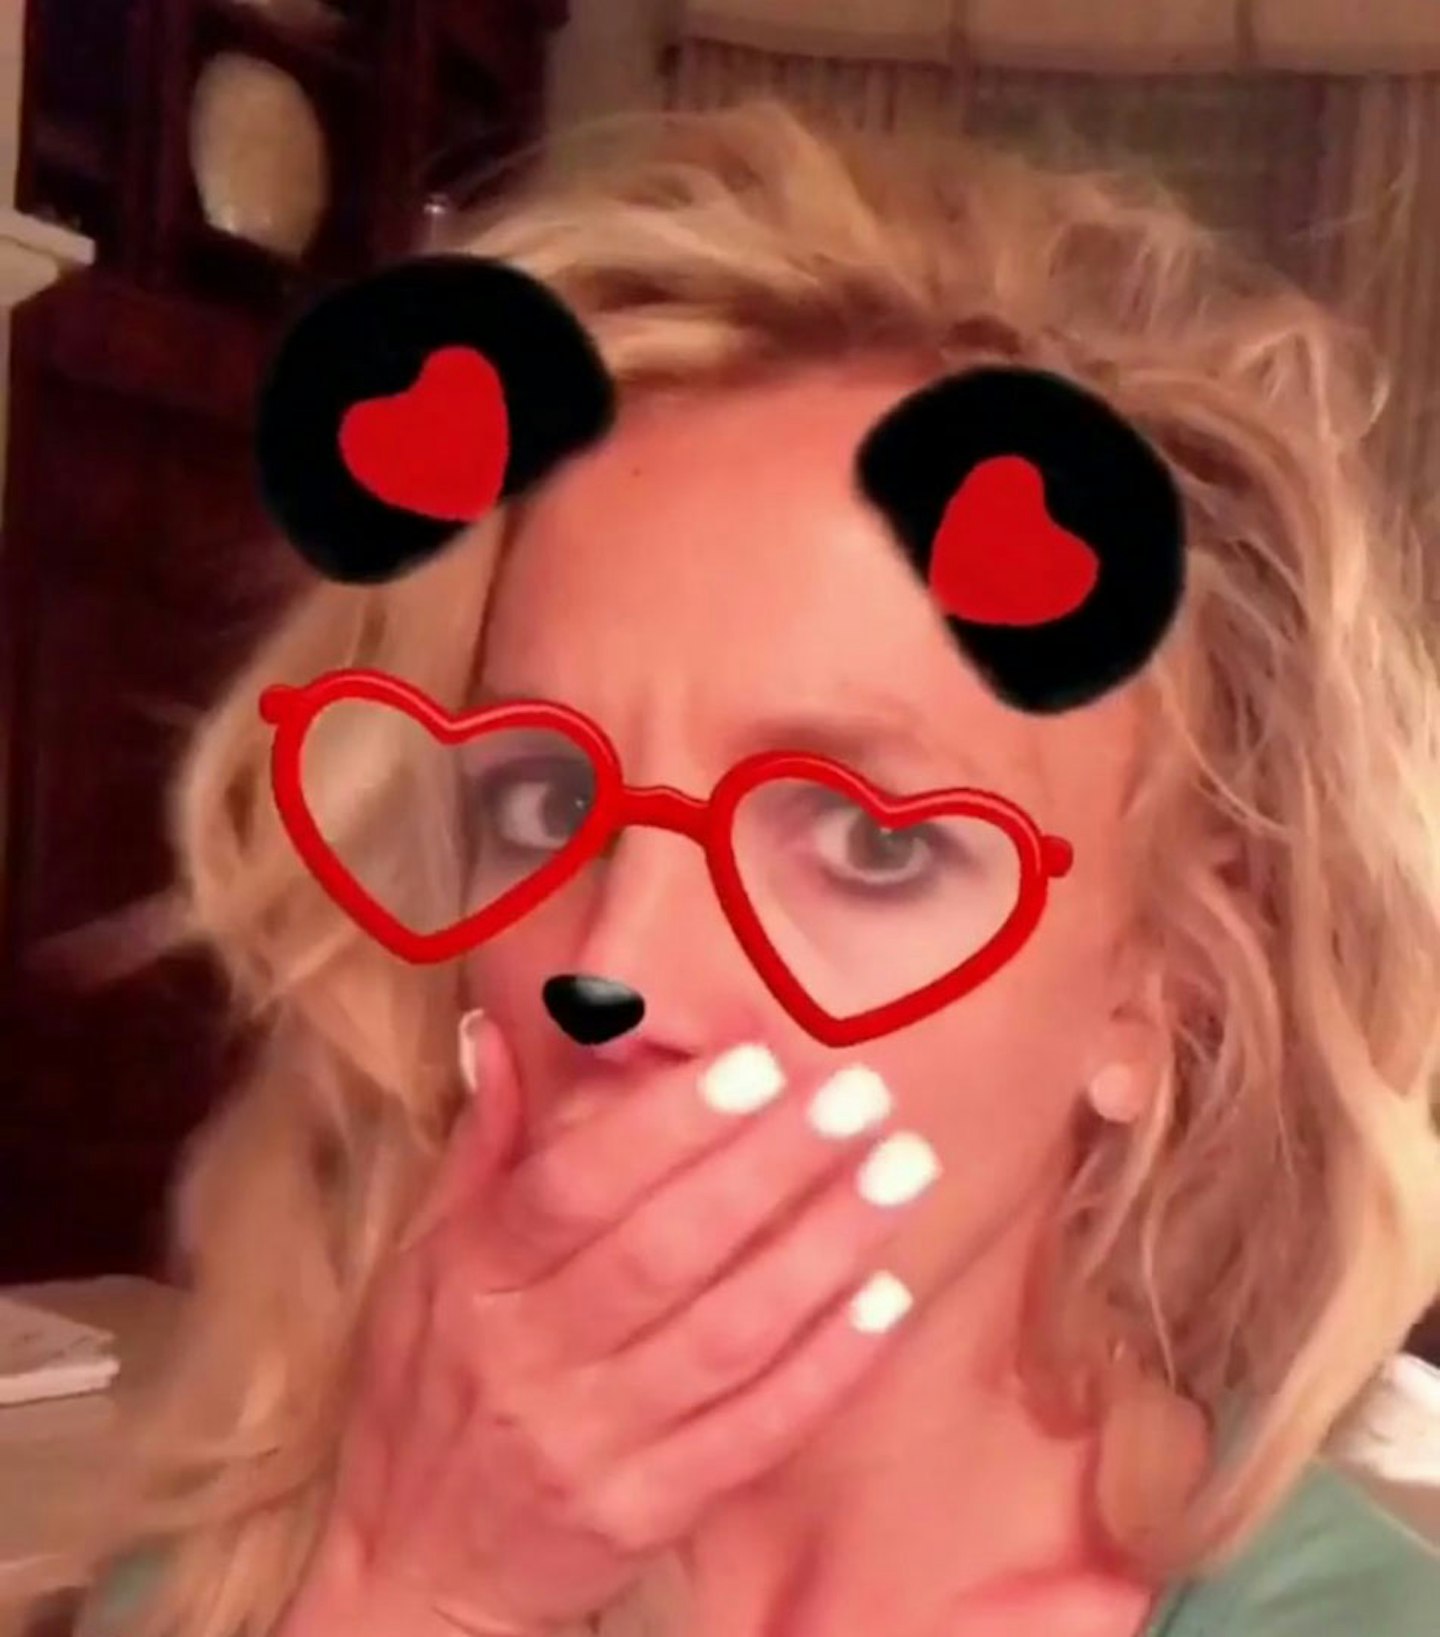 Evolution of Britney Spears' Instagram